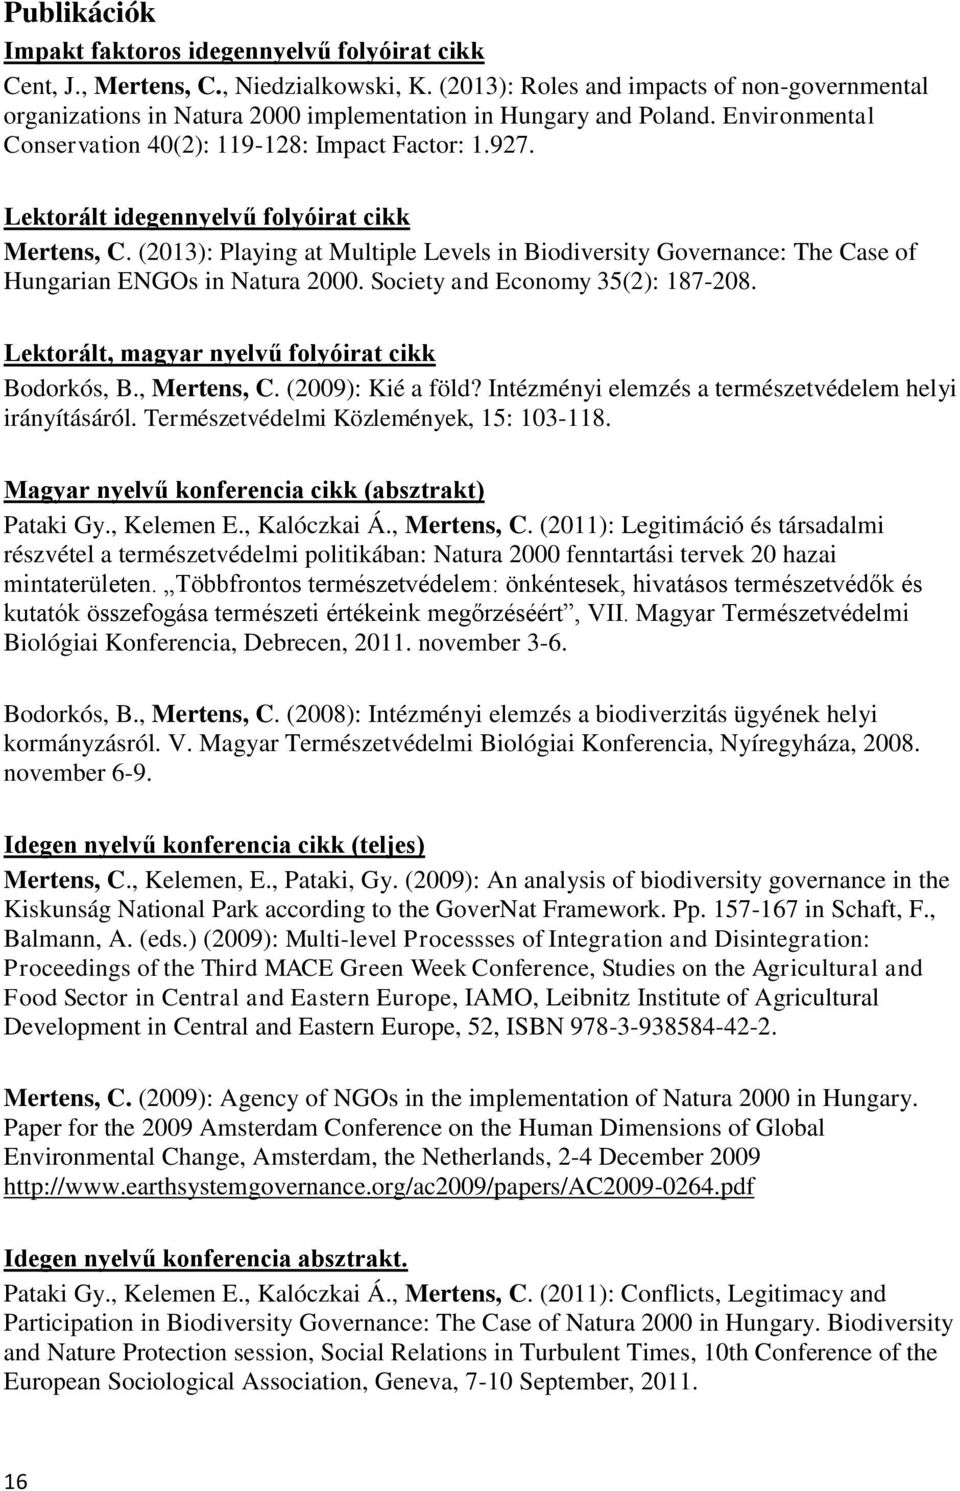 Lektorált idegennyelvű folyóirat cikk Mertens, C. (2013): Playing at Multiple Levels in Biodiversity Governance: The Case of Hungarian ENGOs in Natura 2000. Society and Economy 35(2): 187-208.